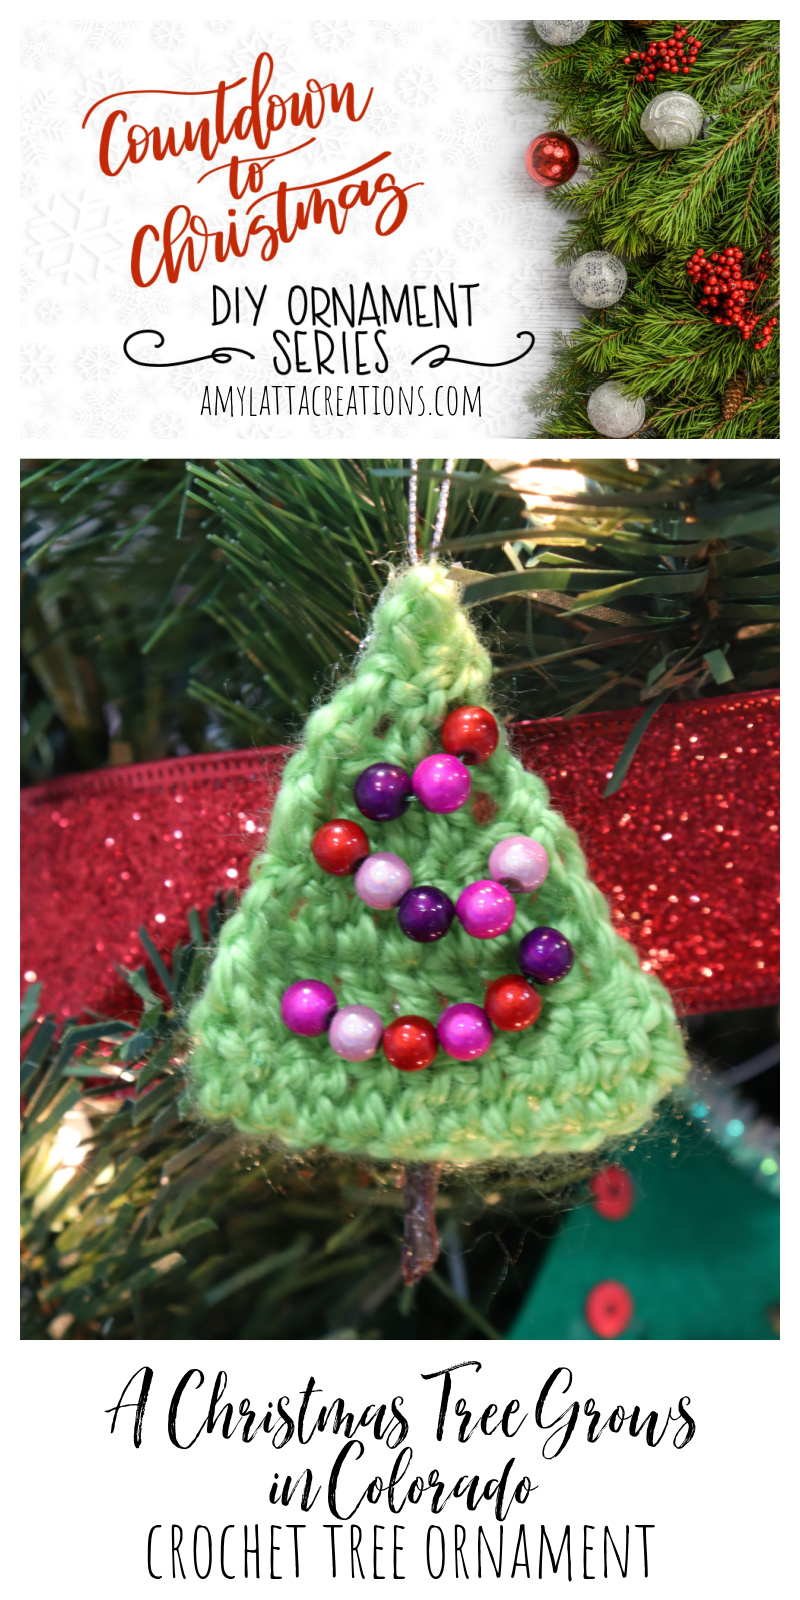 Crochet Tree Ornament